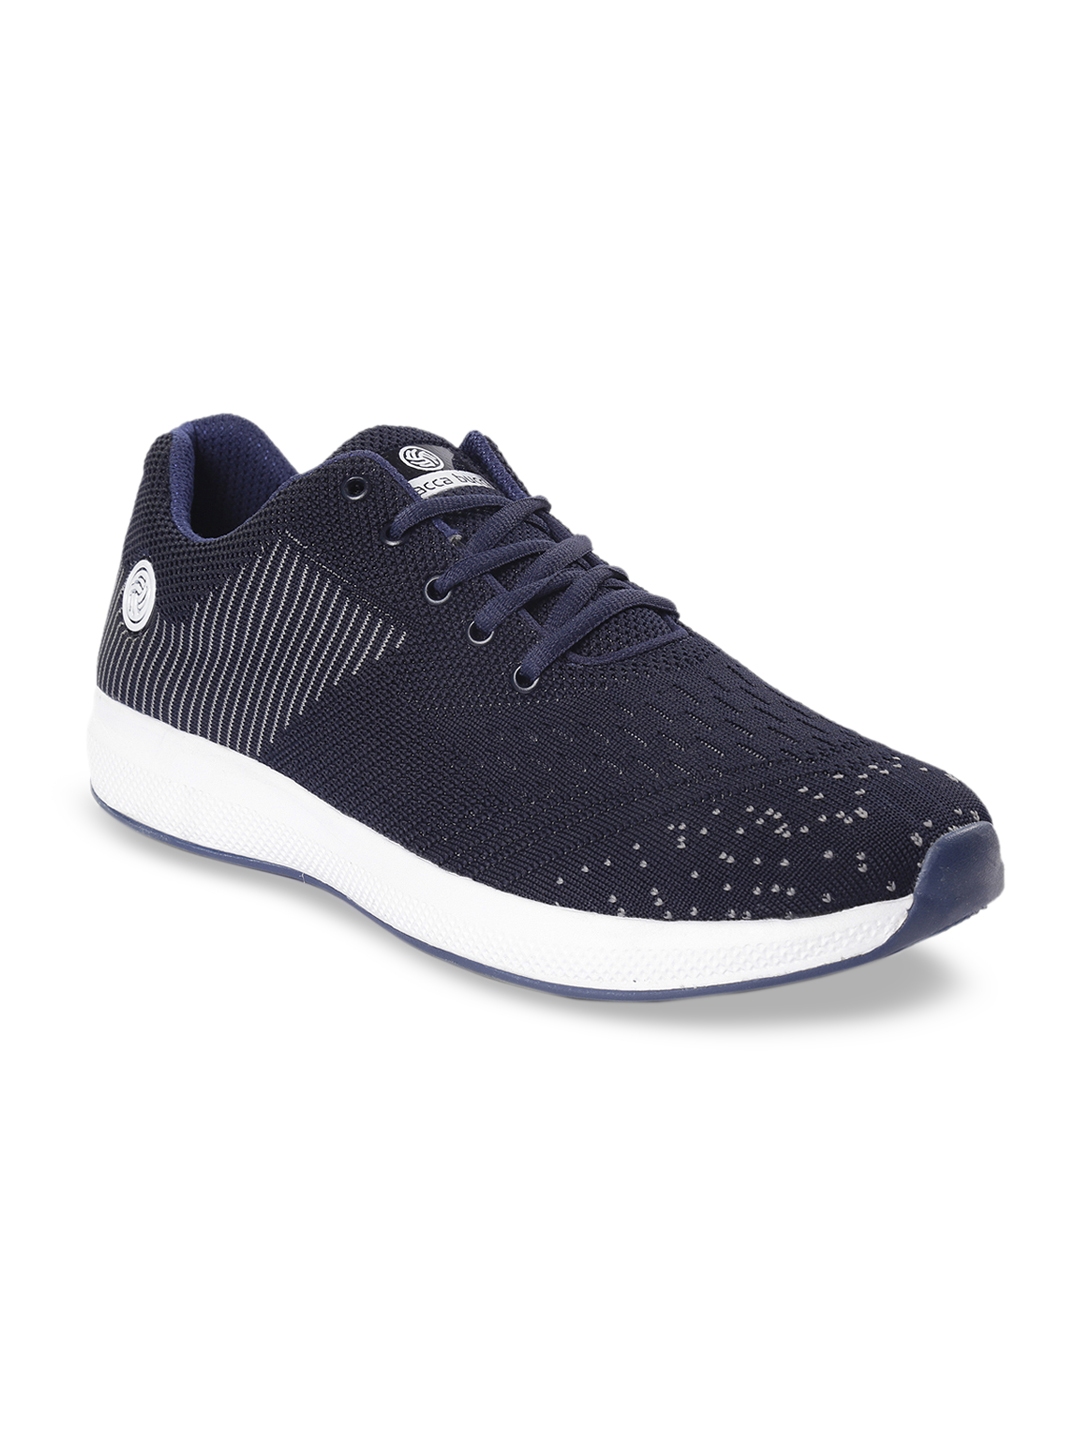 Buy Bacca Bucci Men Blue Sneakers - Casual Shoes for Men 9891739 | Myntra